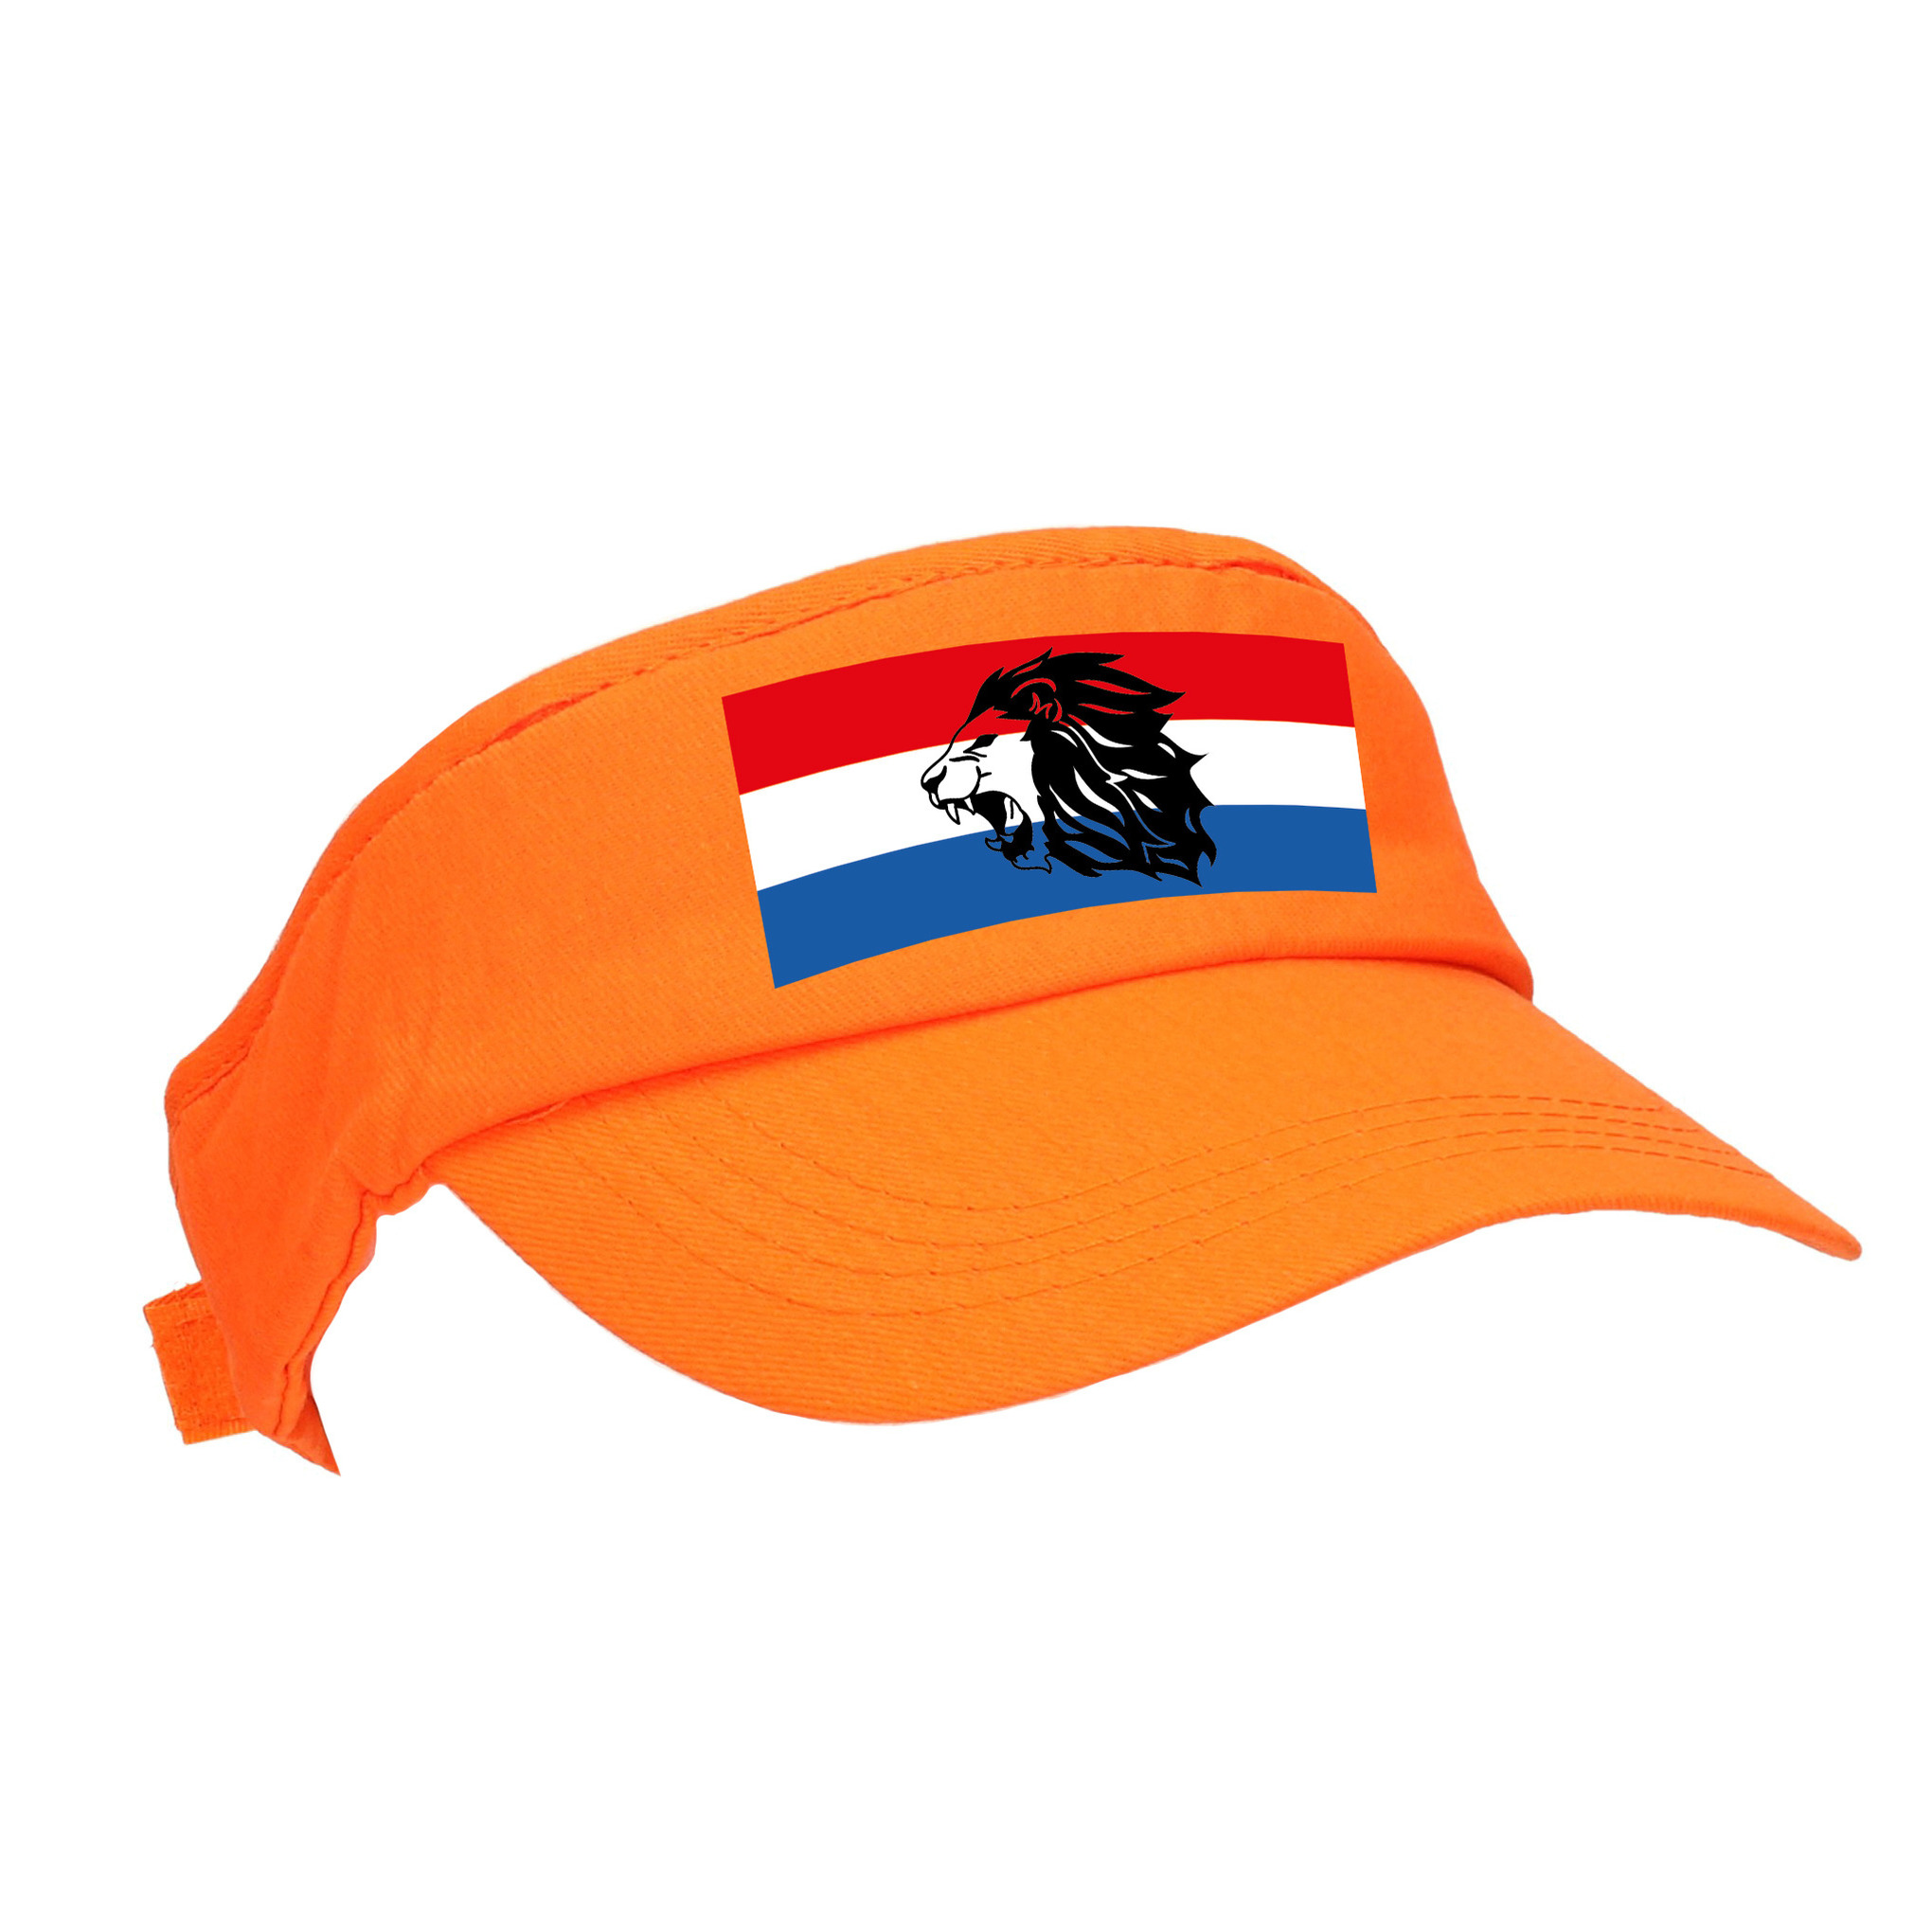 Oranje supporter - Koningsdag zonneklep met Nederlandse vlag en leeuw voor EK/ WK fans